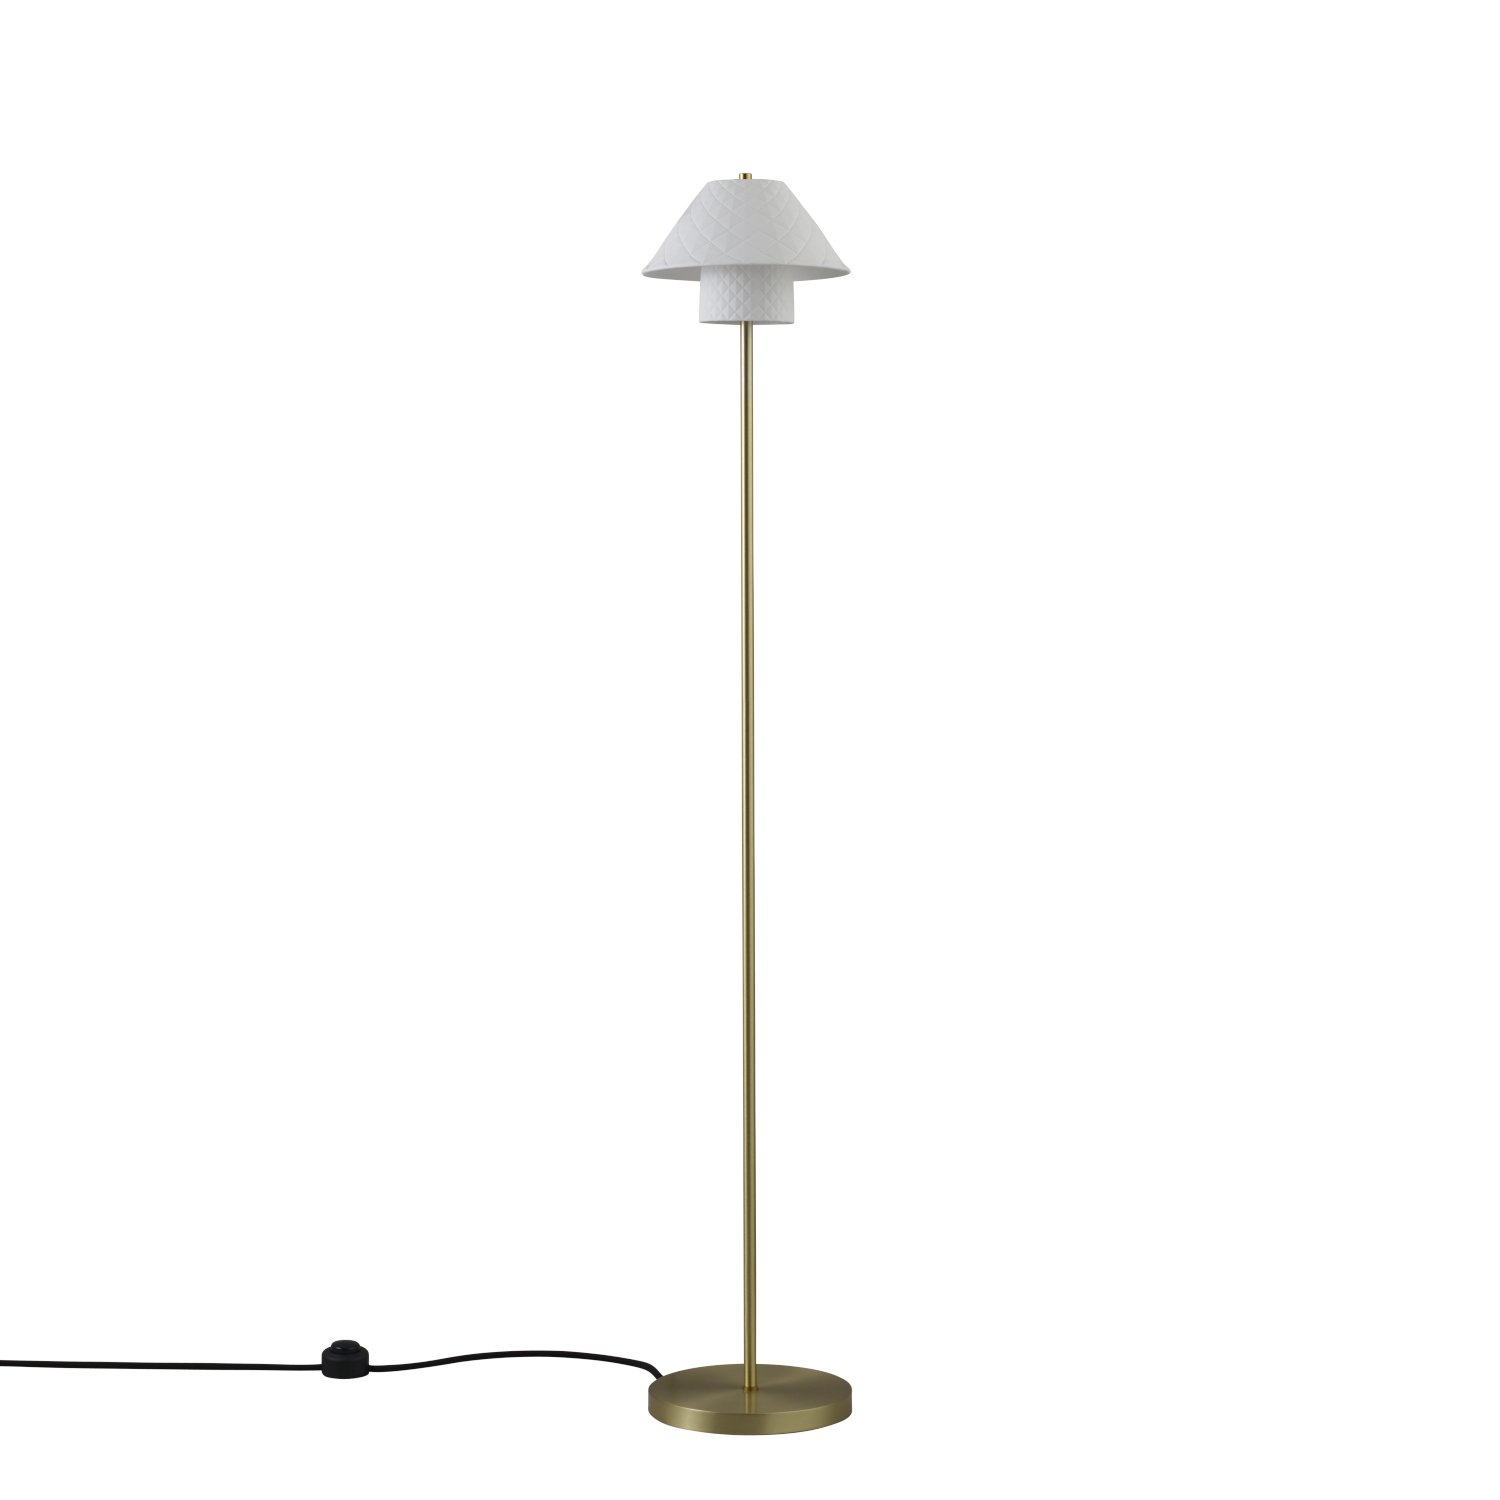 Original Btc – Oxford Double Floor Light – Natural White & Satin Brass 1225 X 205 mm